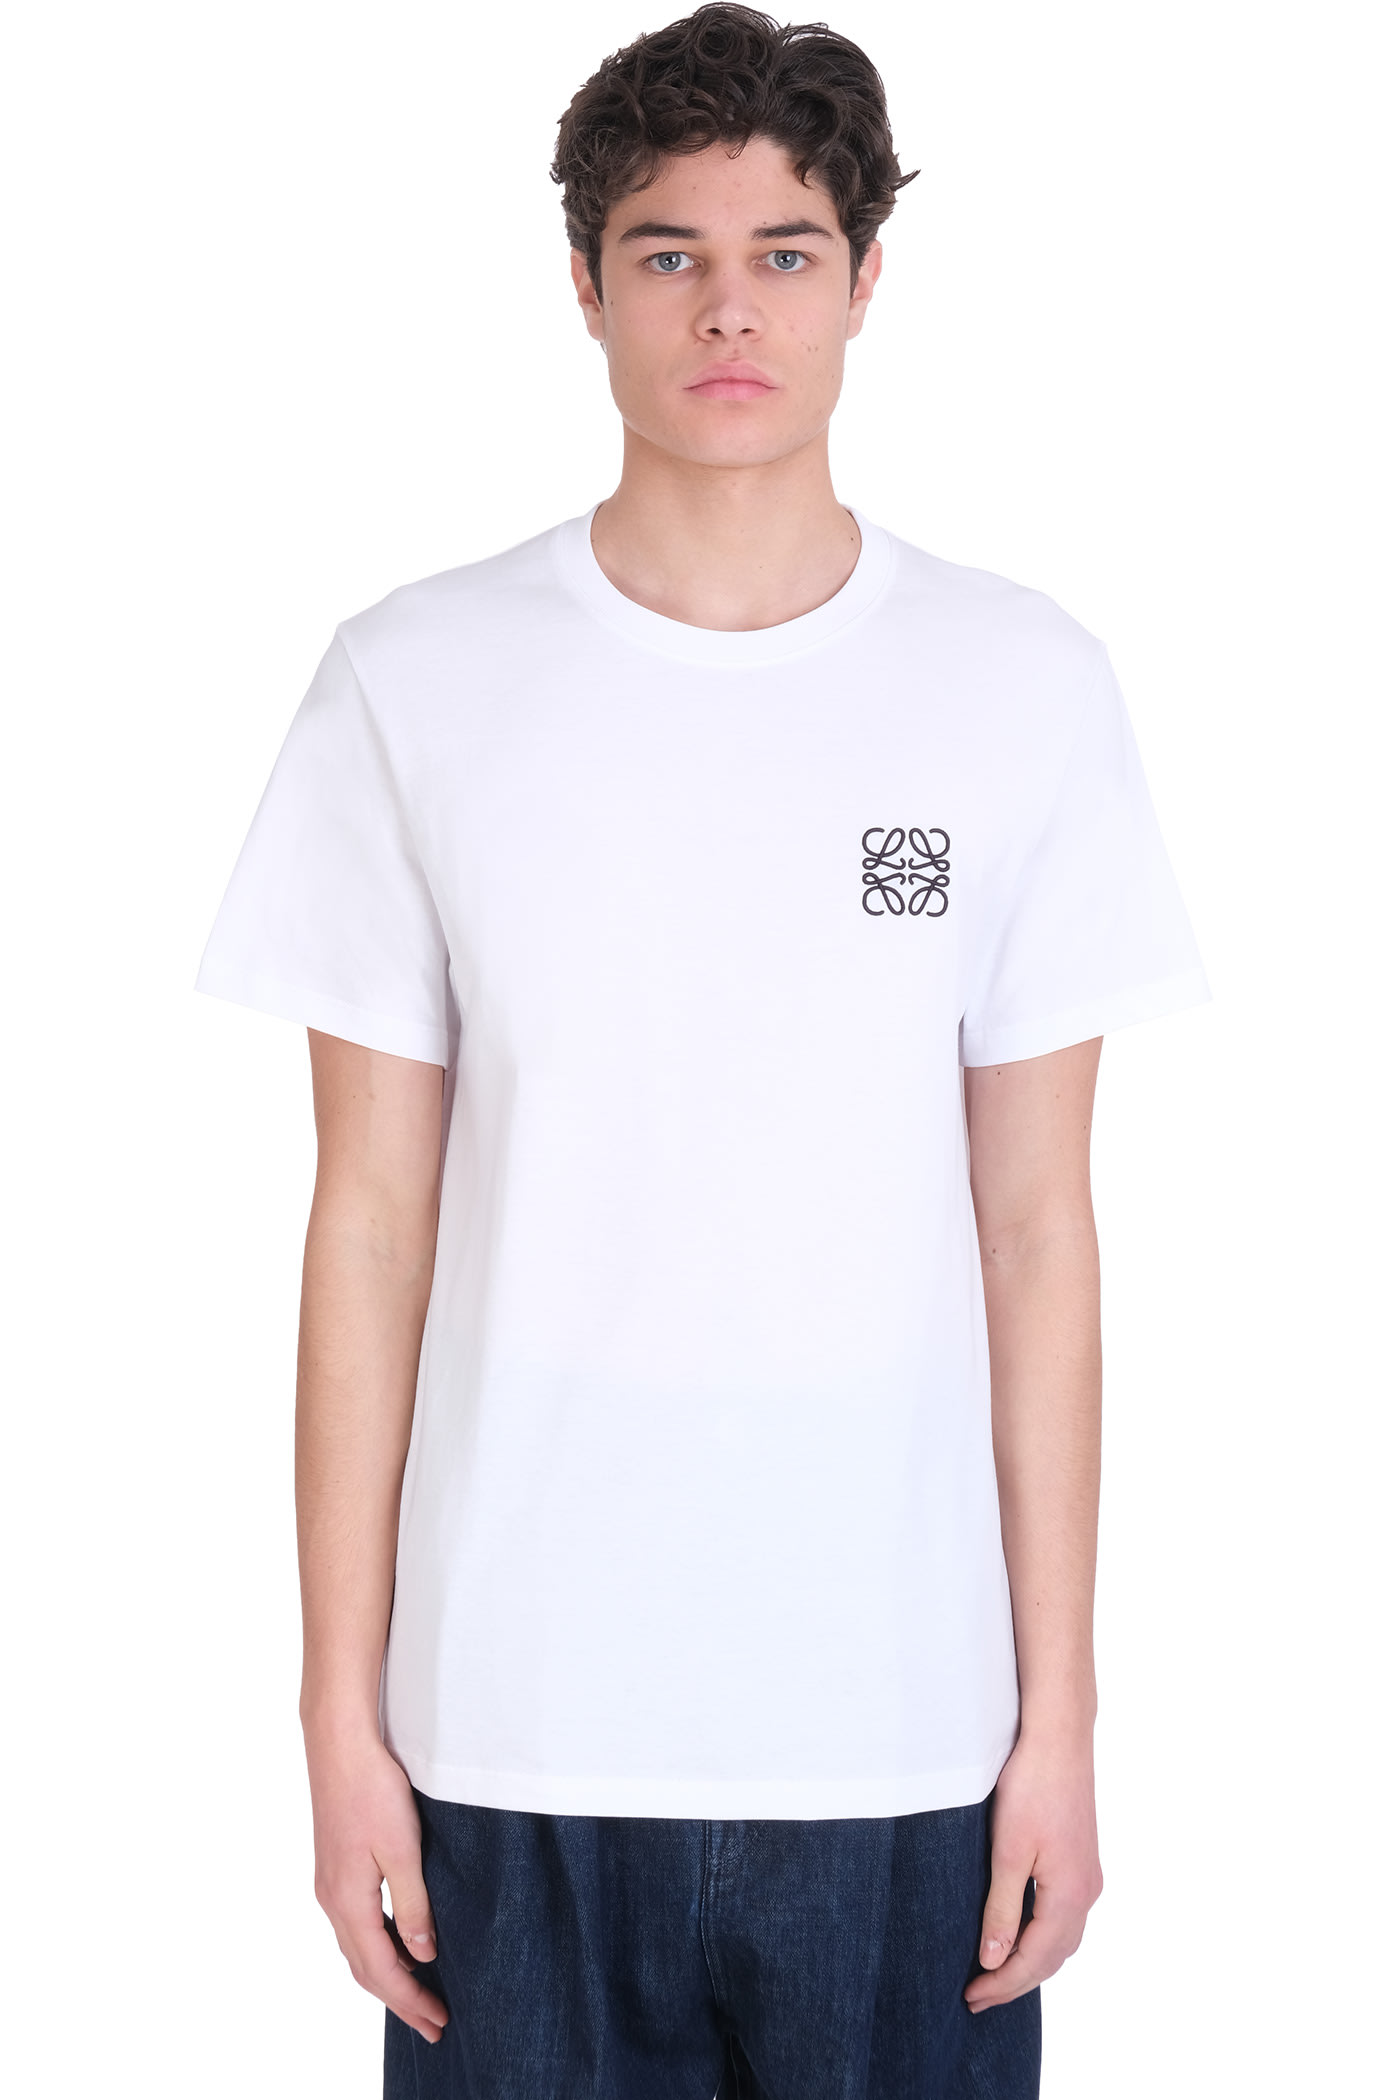 Loewe T-shirt In White Cotton